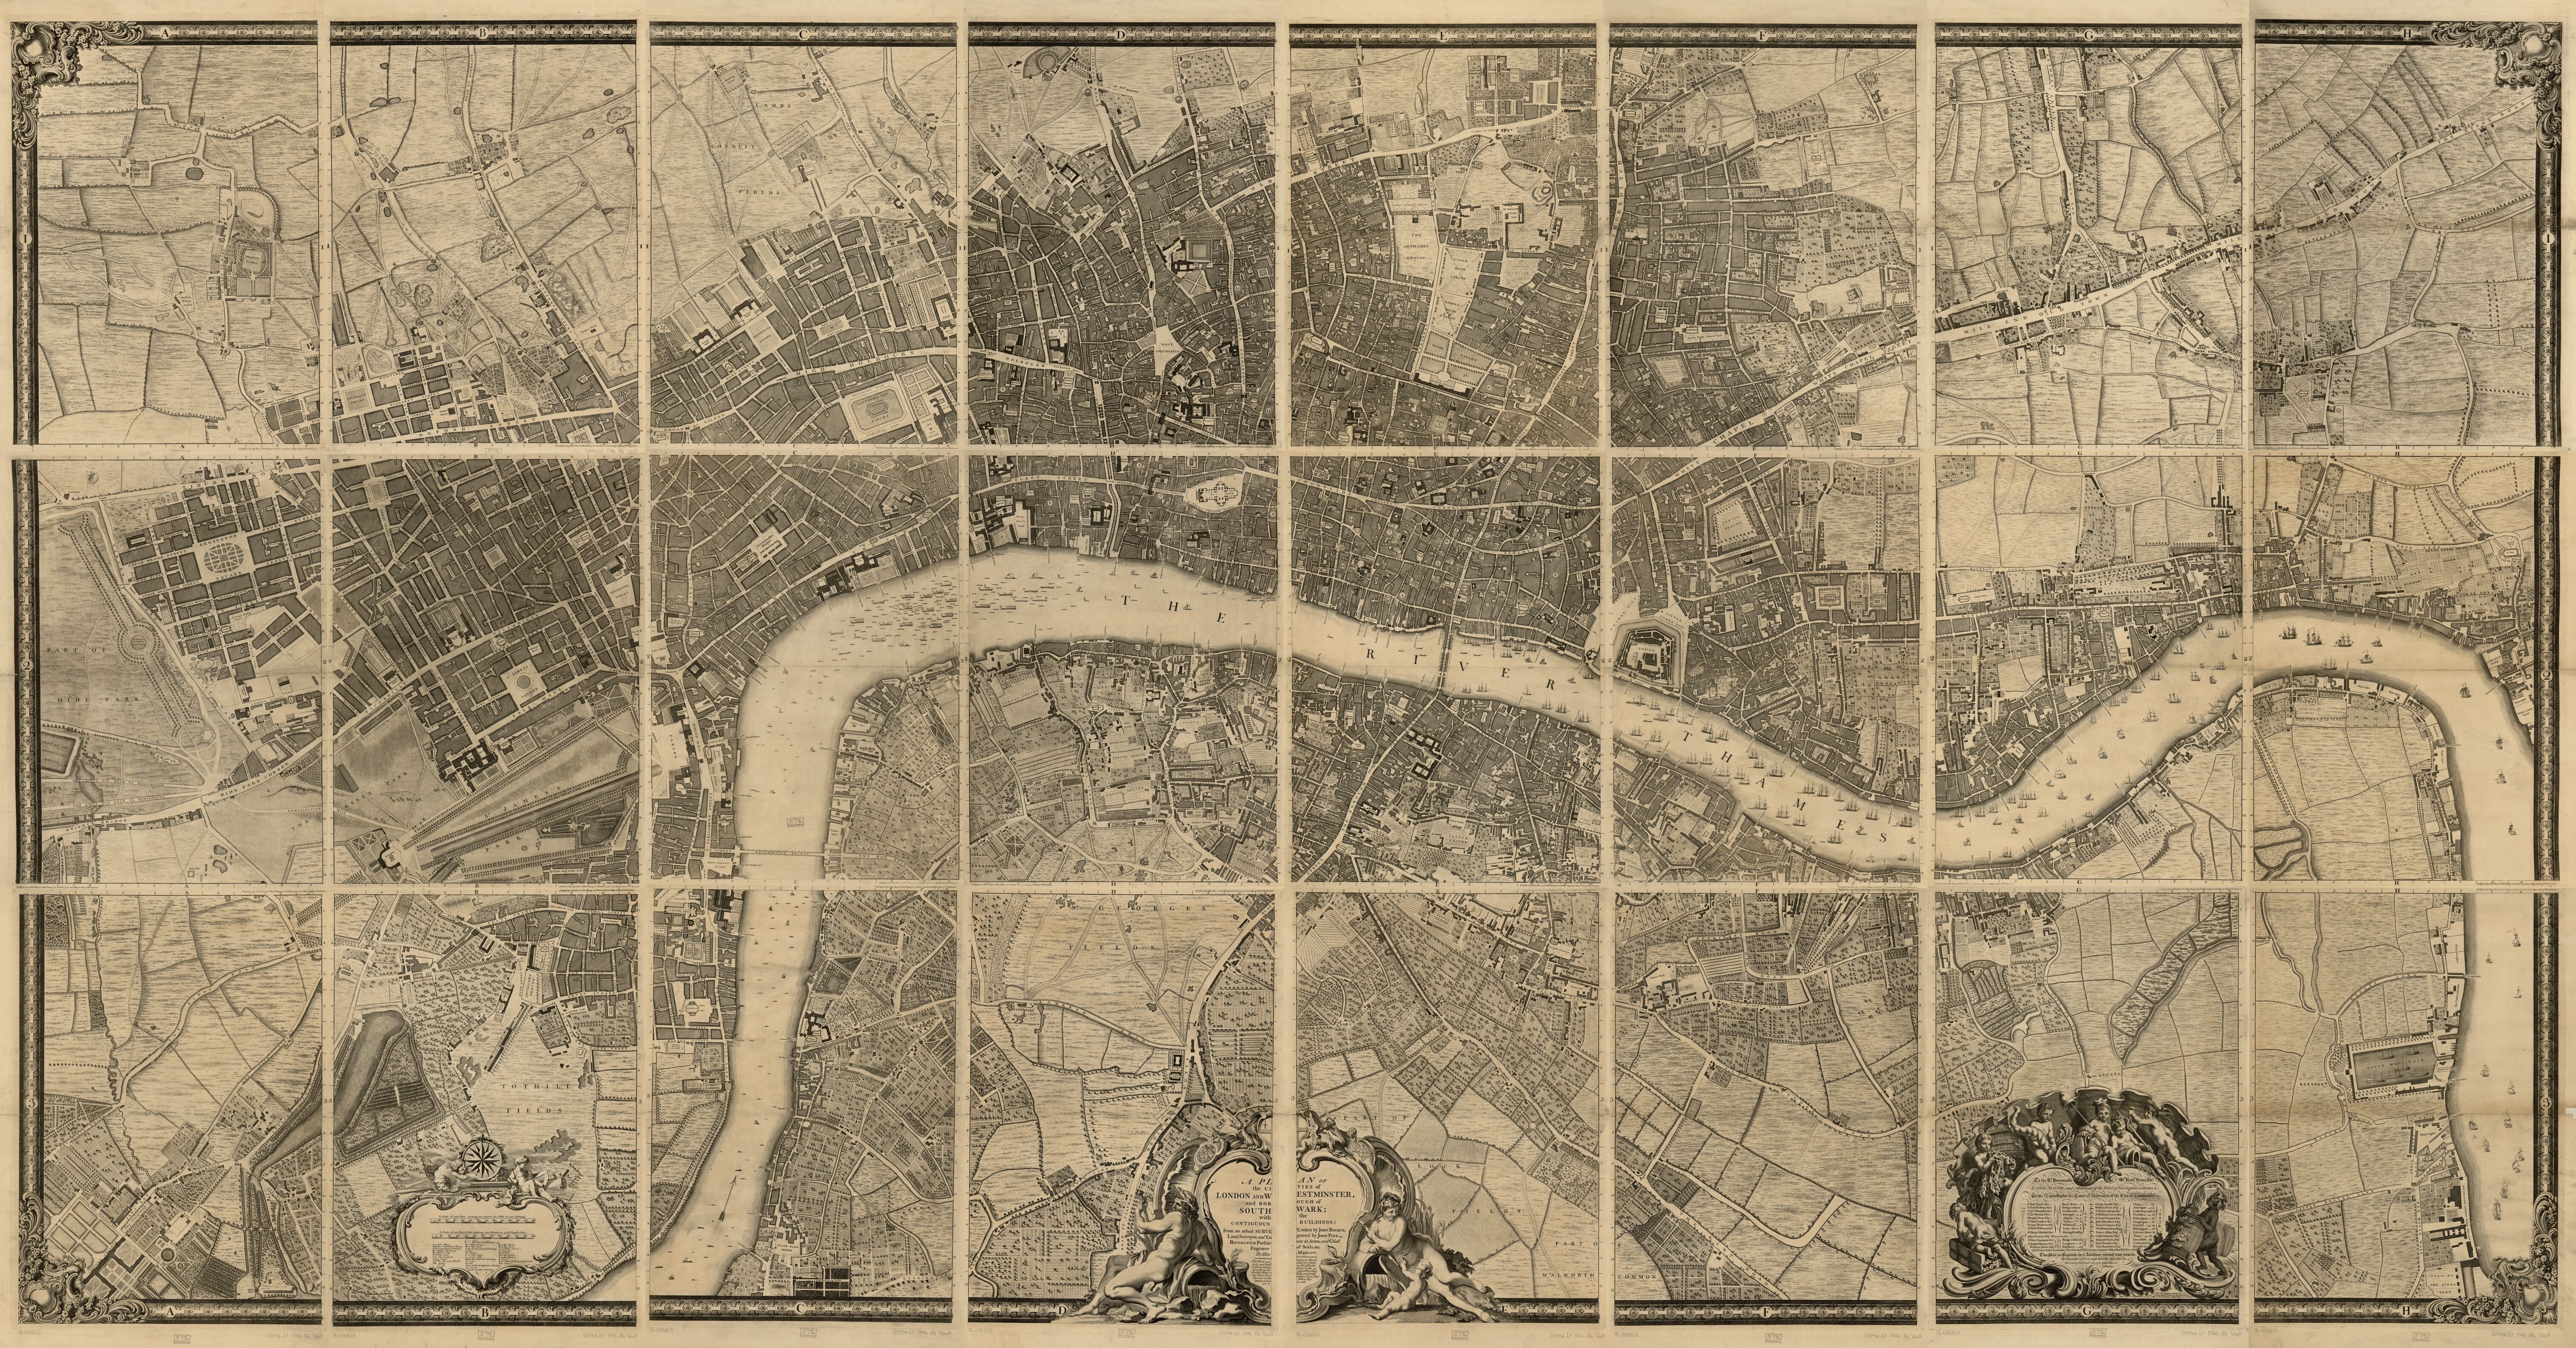 London c1880 Kensington in 1764 from Rocque's map KENSINGTON PALACE 